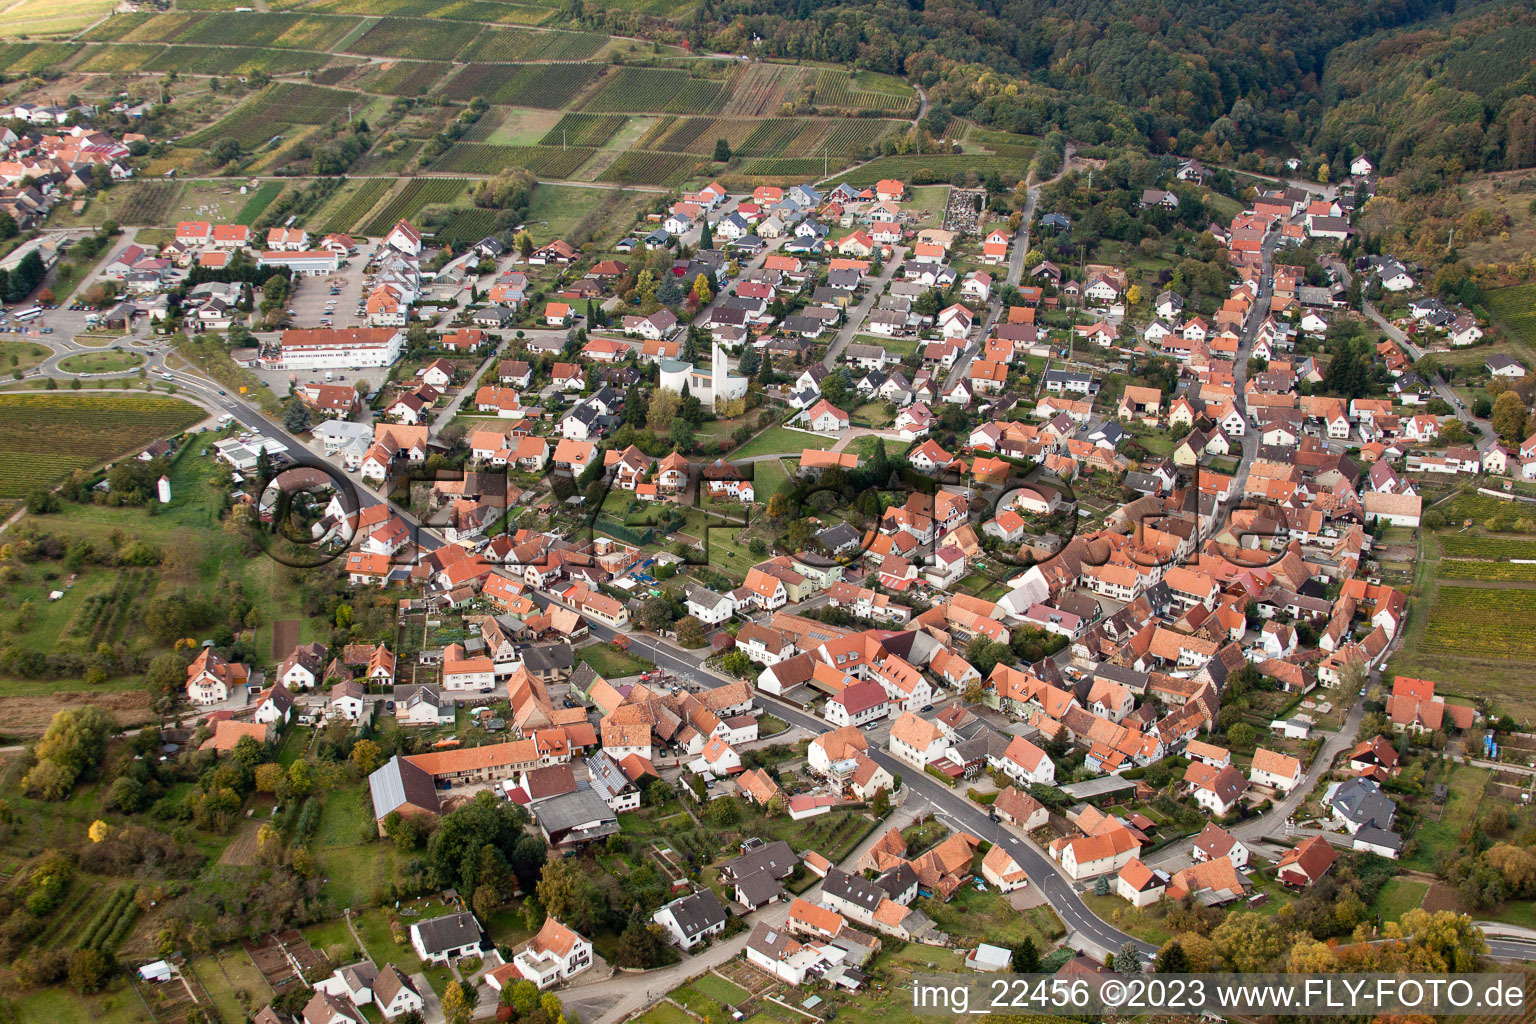 District Rechtenbach in Schweigen-Rechtenbach in the state Rhineland-Palatinate, Germany from the drone perspective